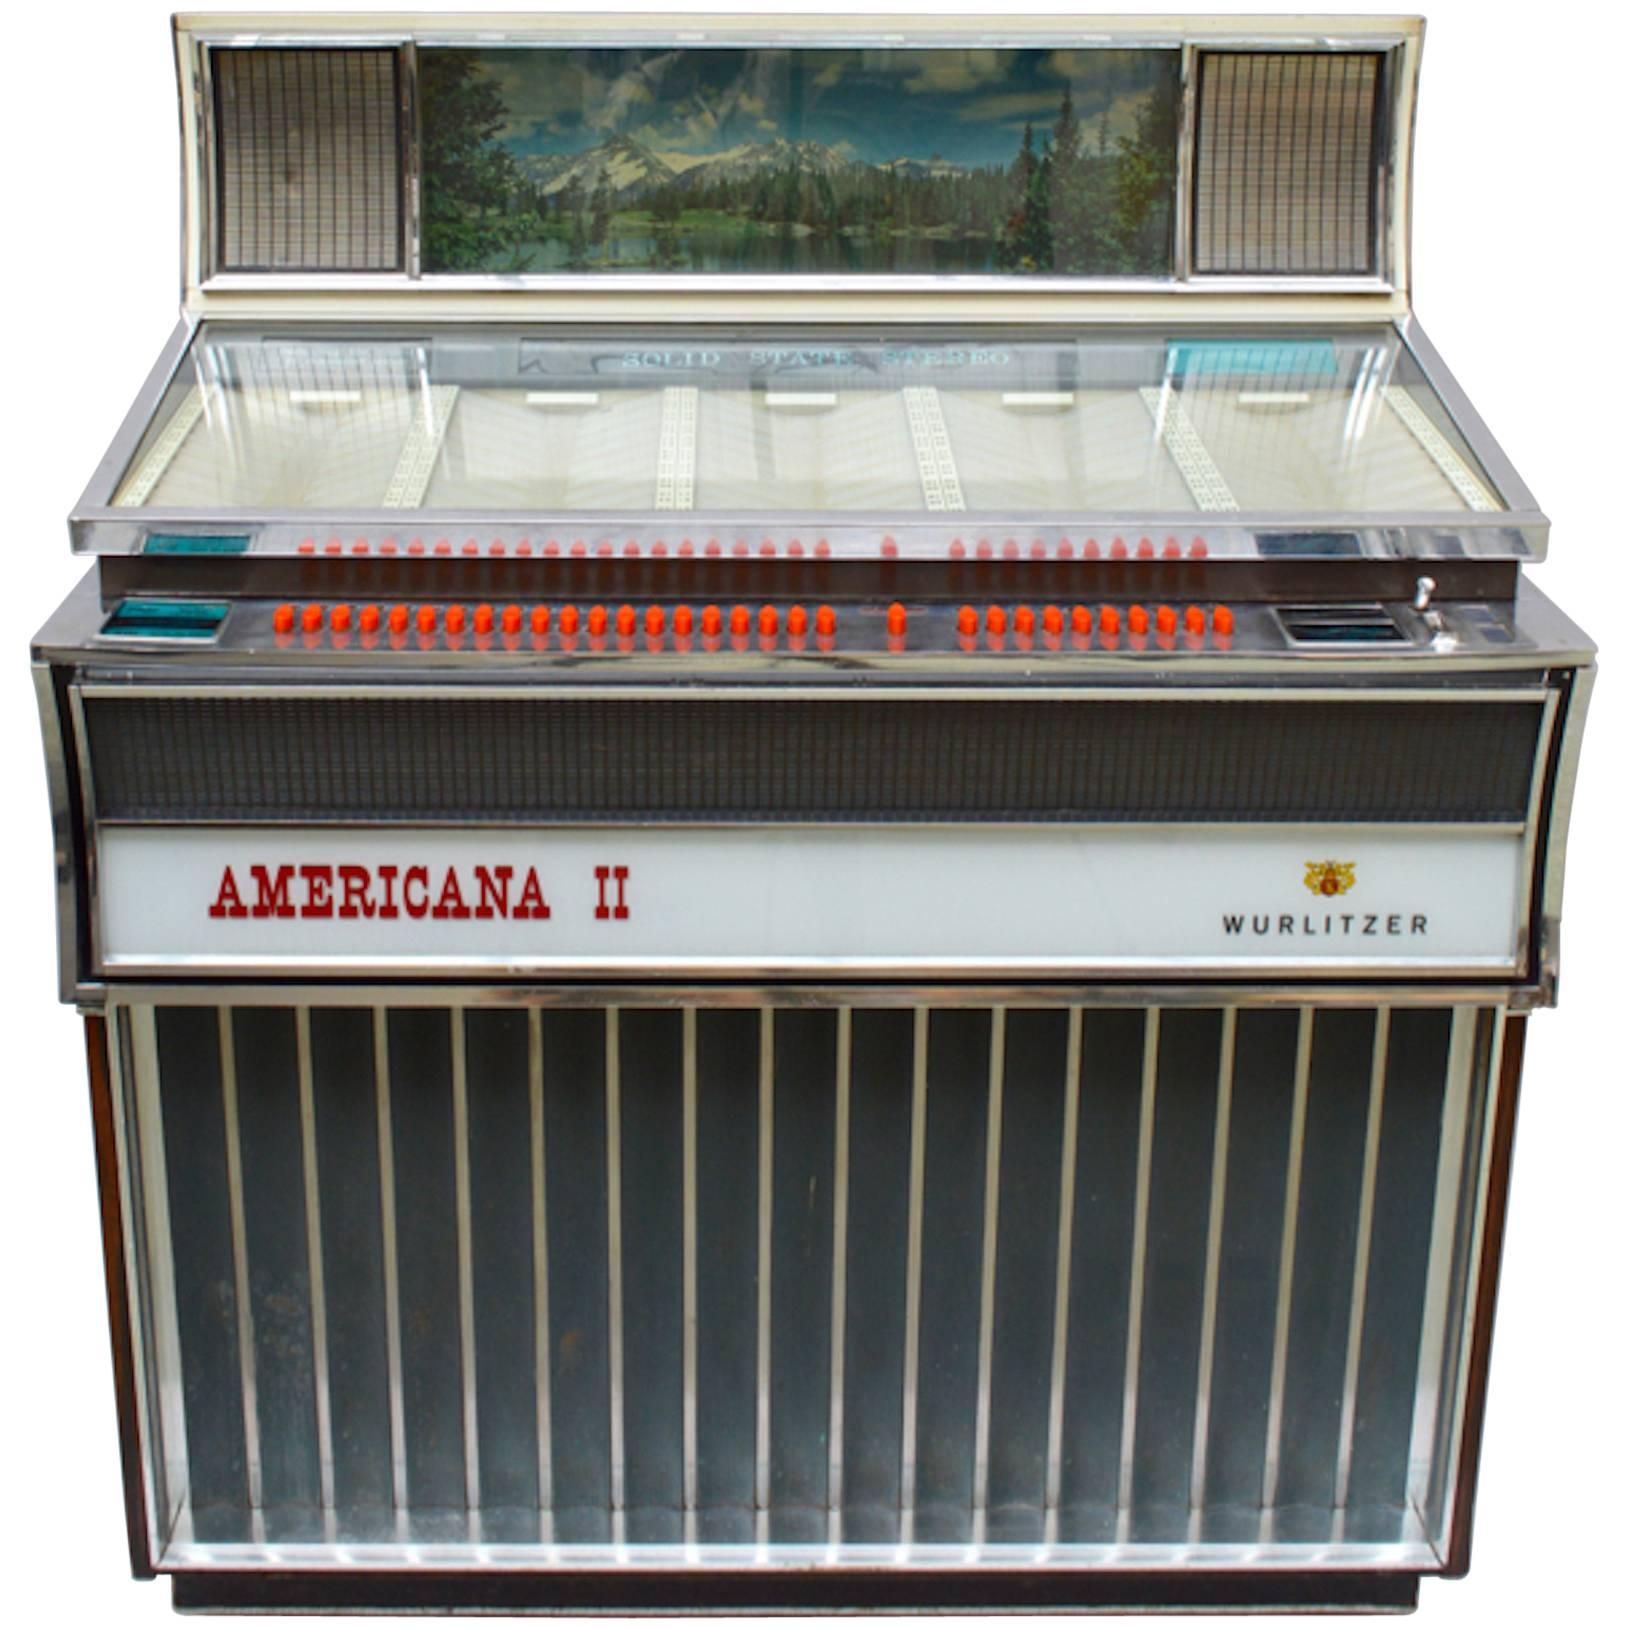 Original 1968 Wurlitzer Americana II Jukebox